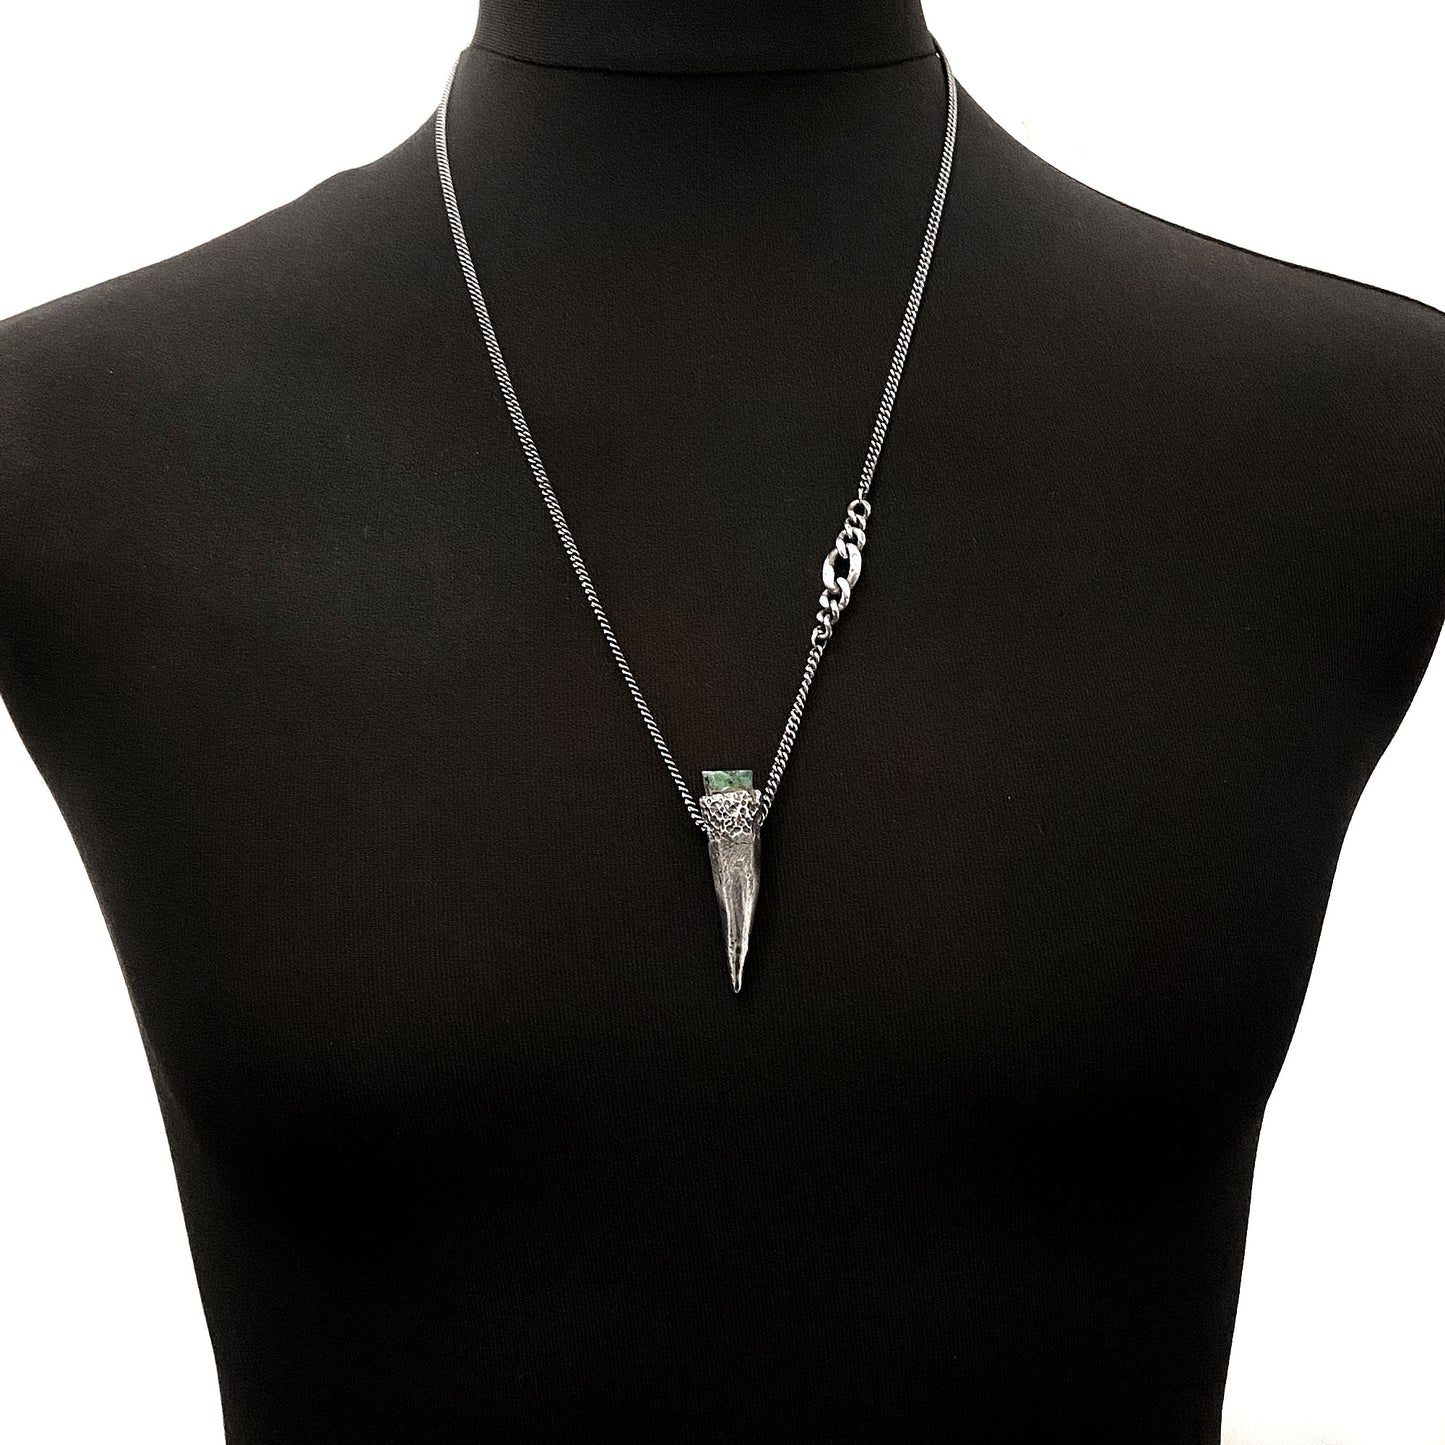 Silver and emerald pendant